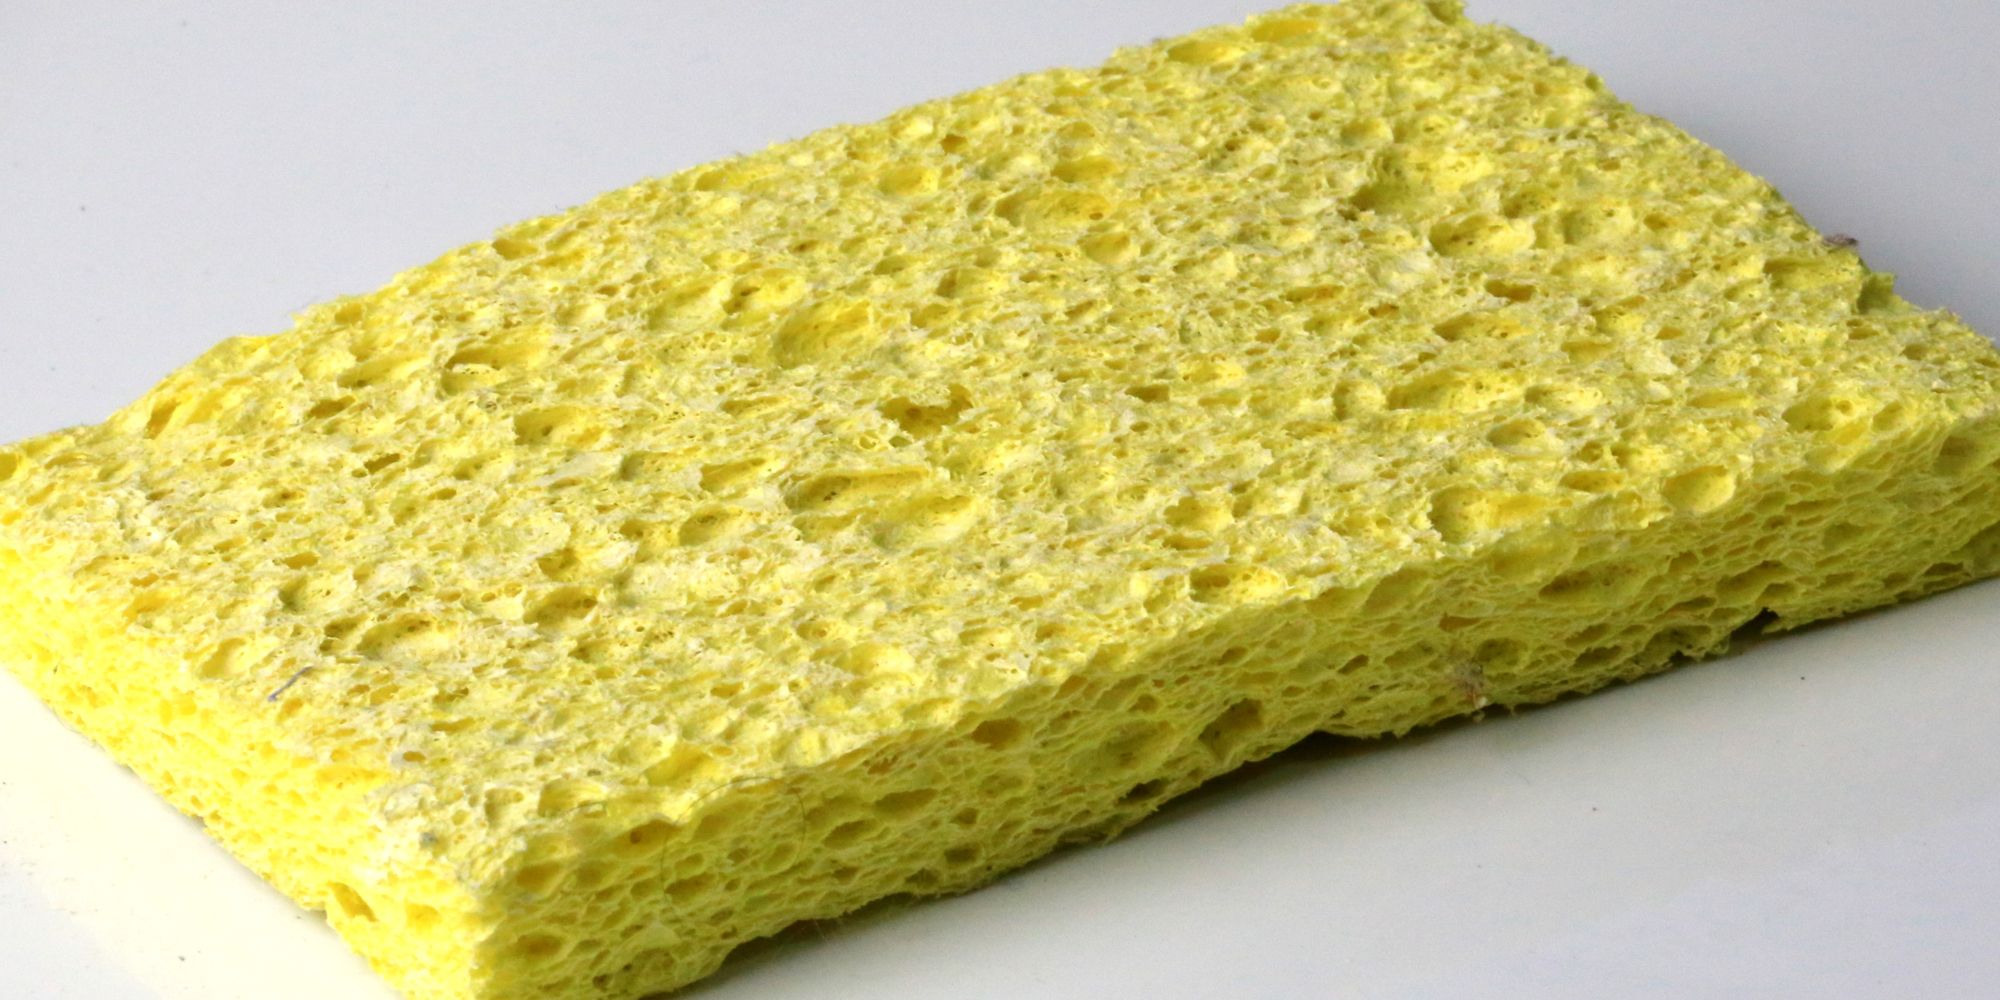 how long to microwave a sponge to kill bacteria